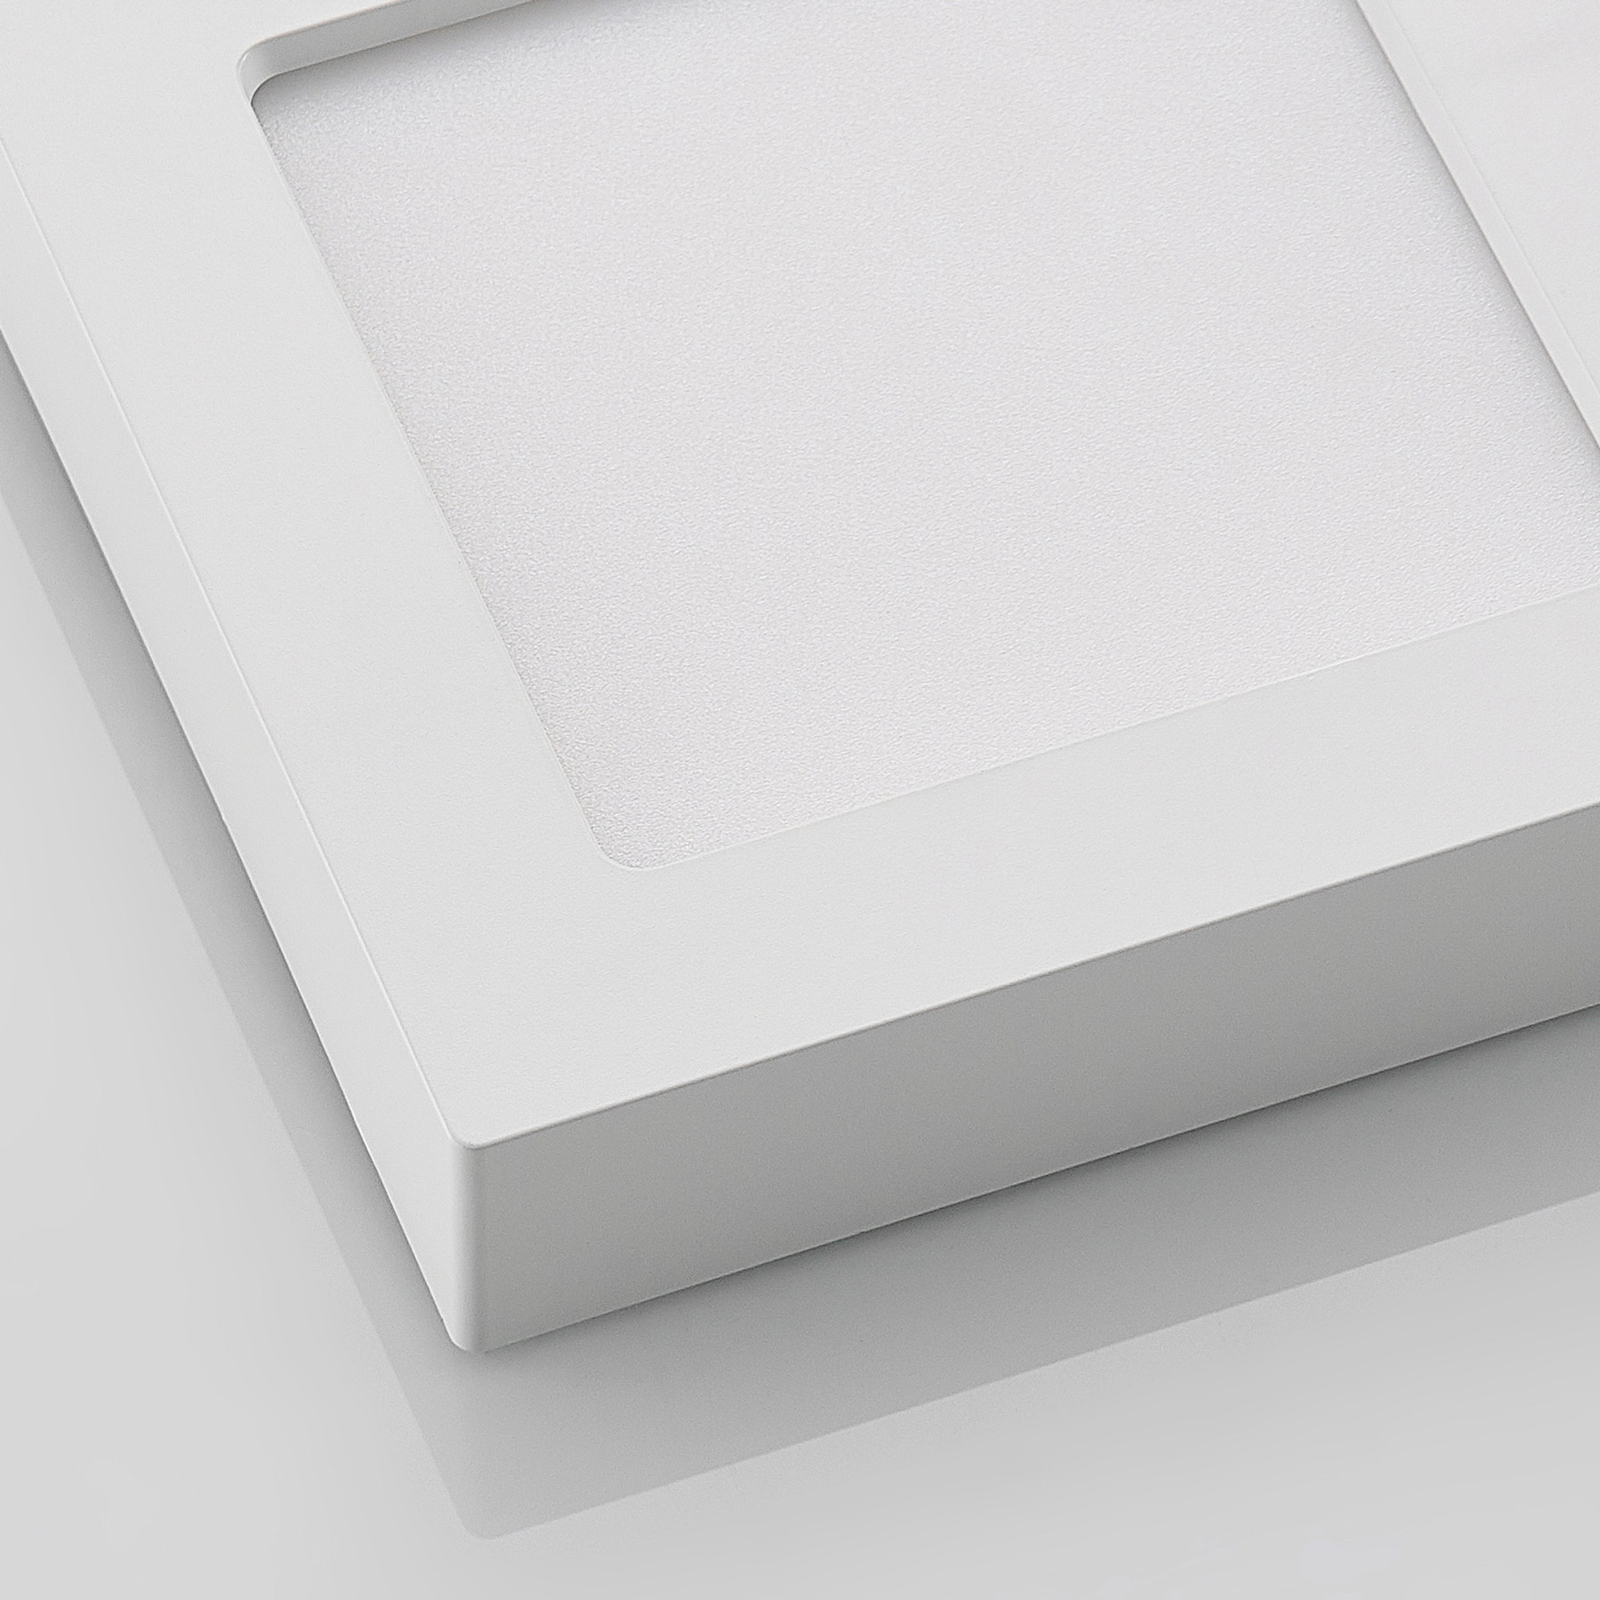 Prios Alette -LED-kattovalaisin valkoinen, 17,2 cm